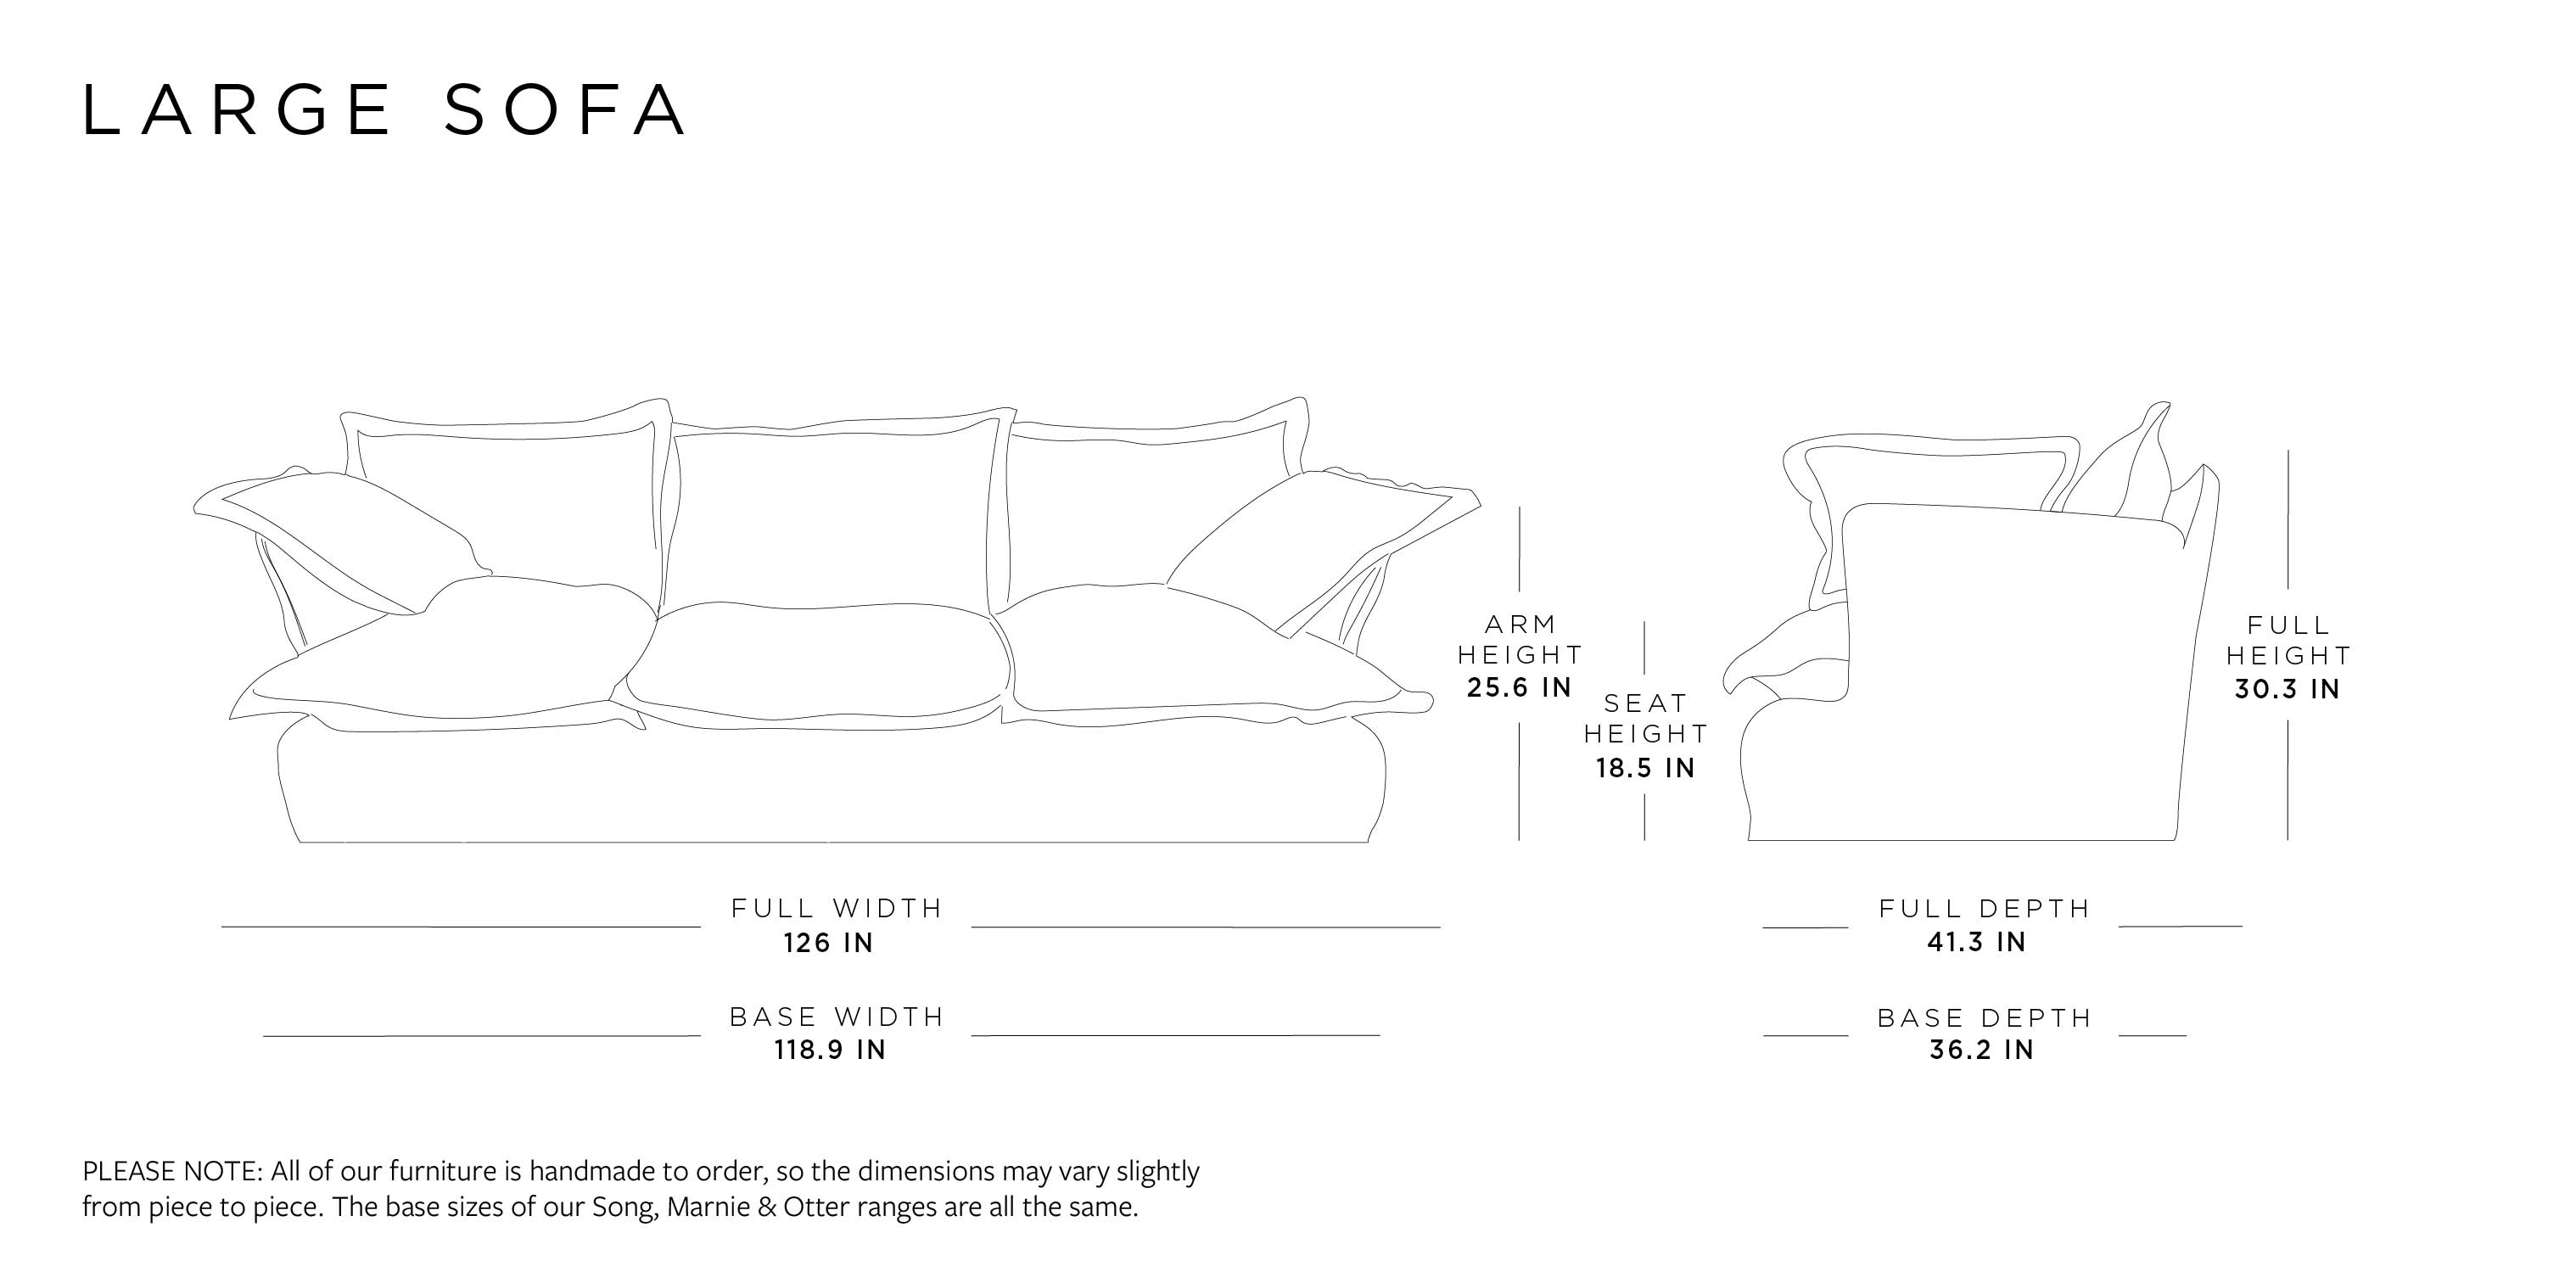 Large Sofa | Otter Range Size Guide